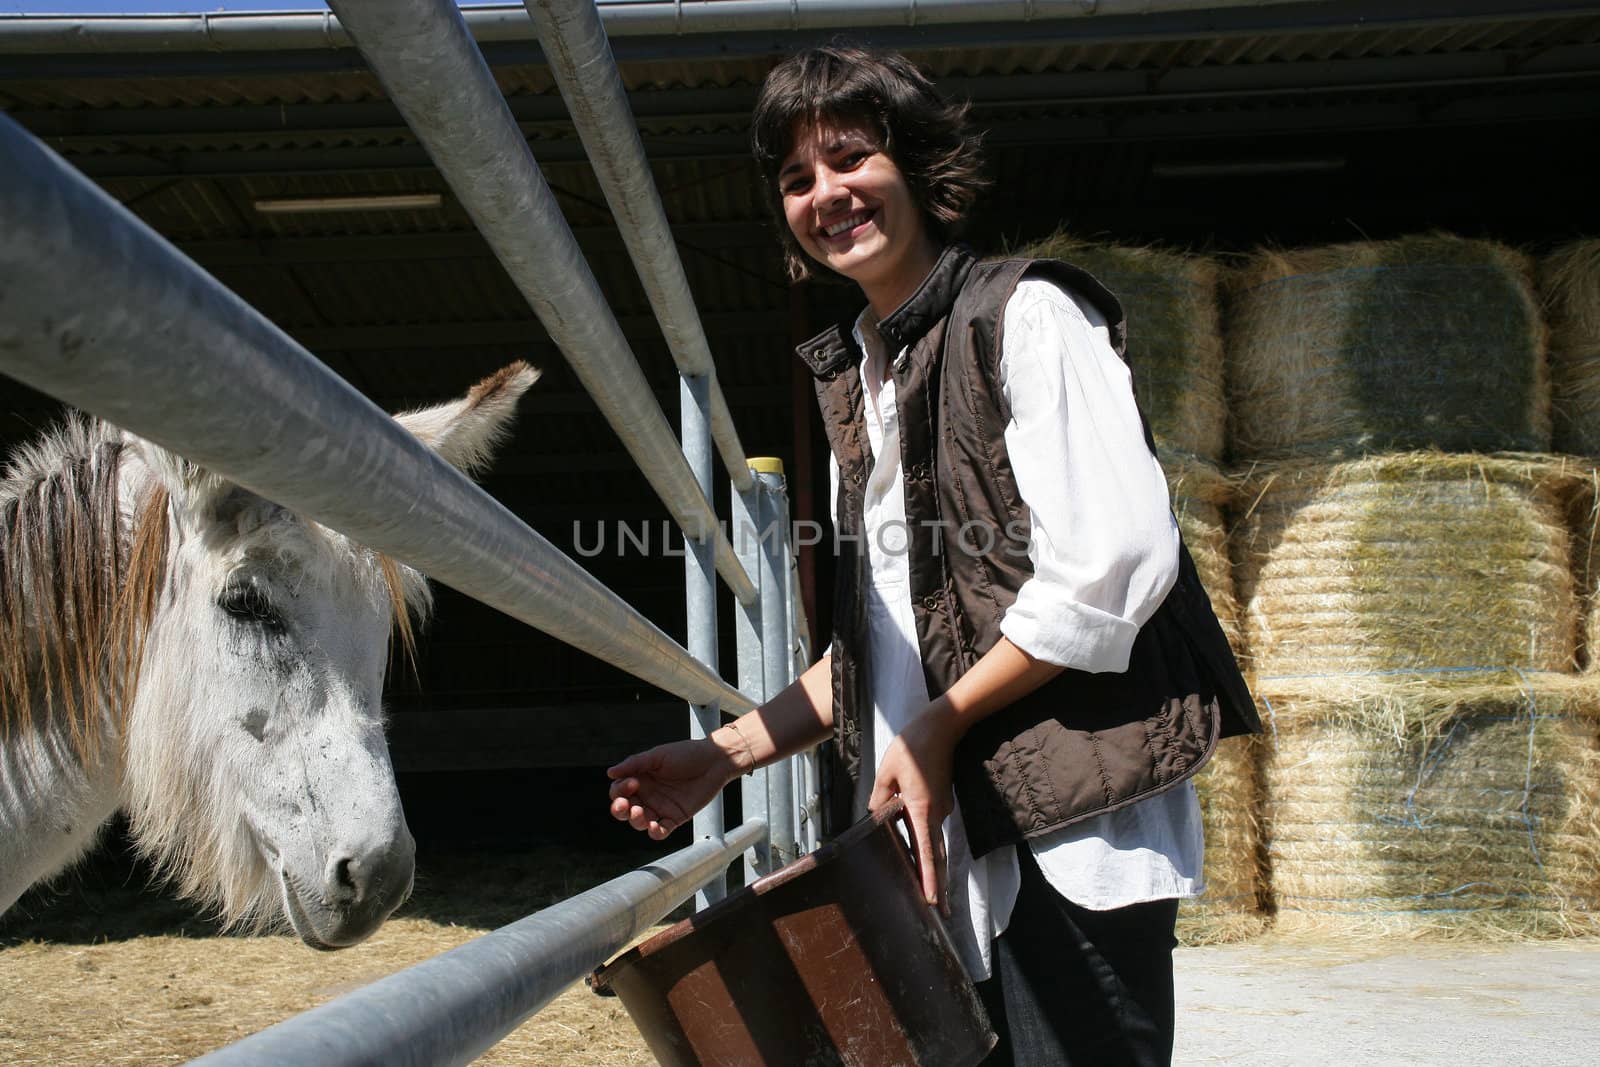 Female farmer stood by horse enclosure by phovoir